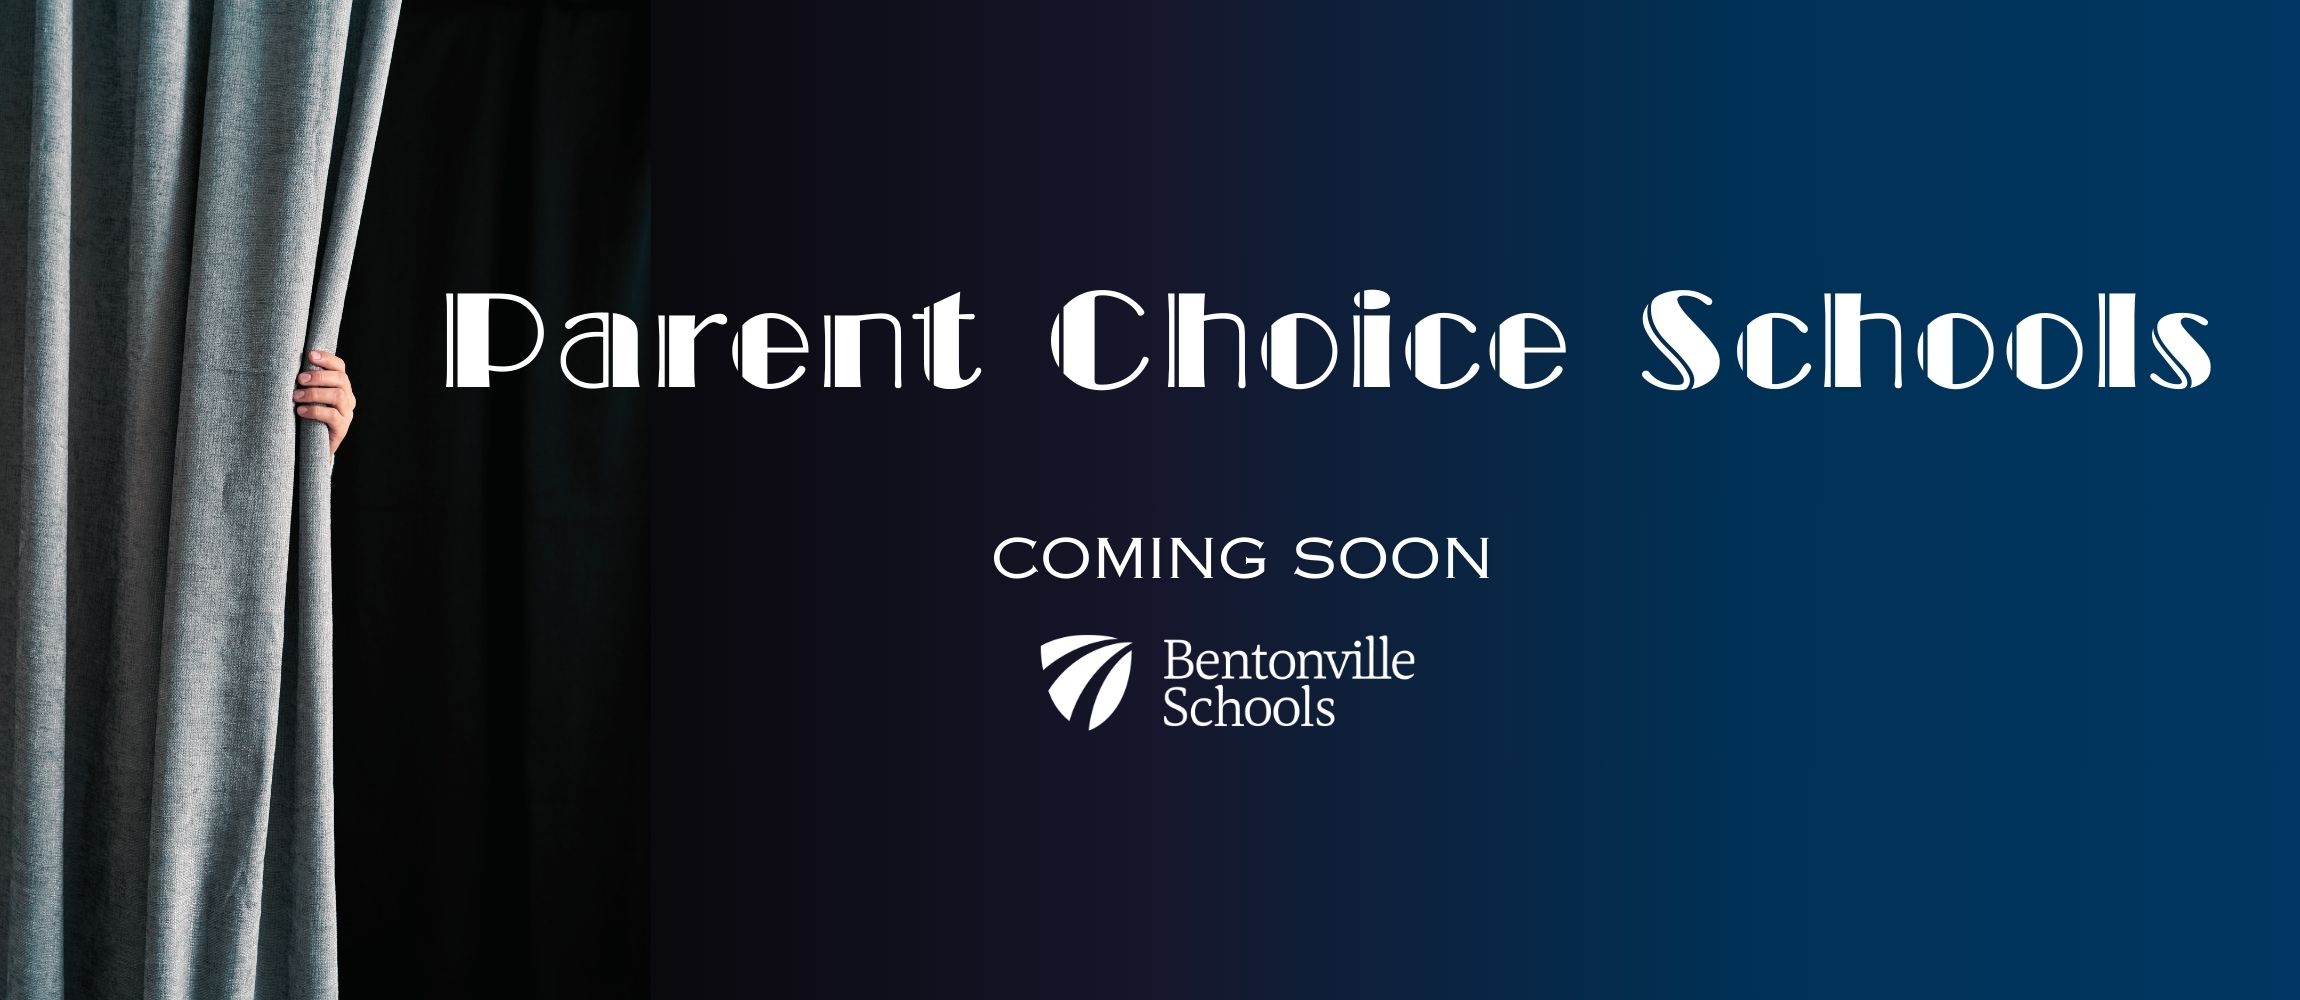 Parent Choice Schools coming to Bentonville Schools